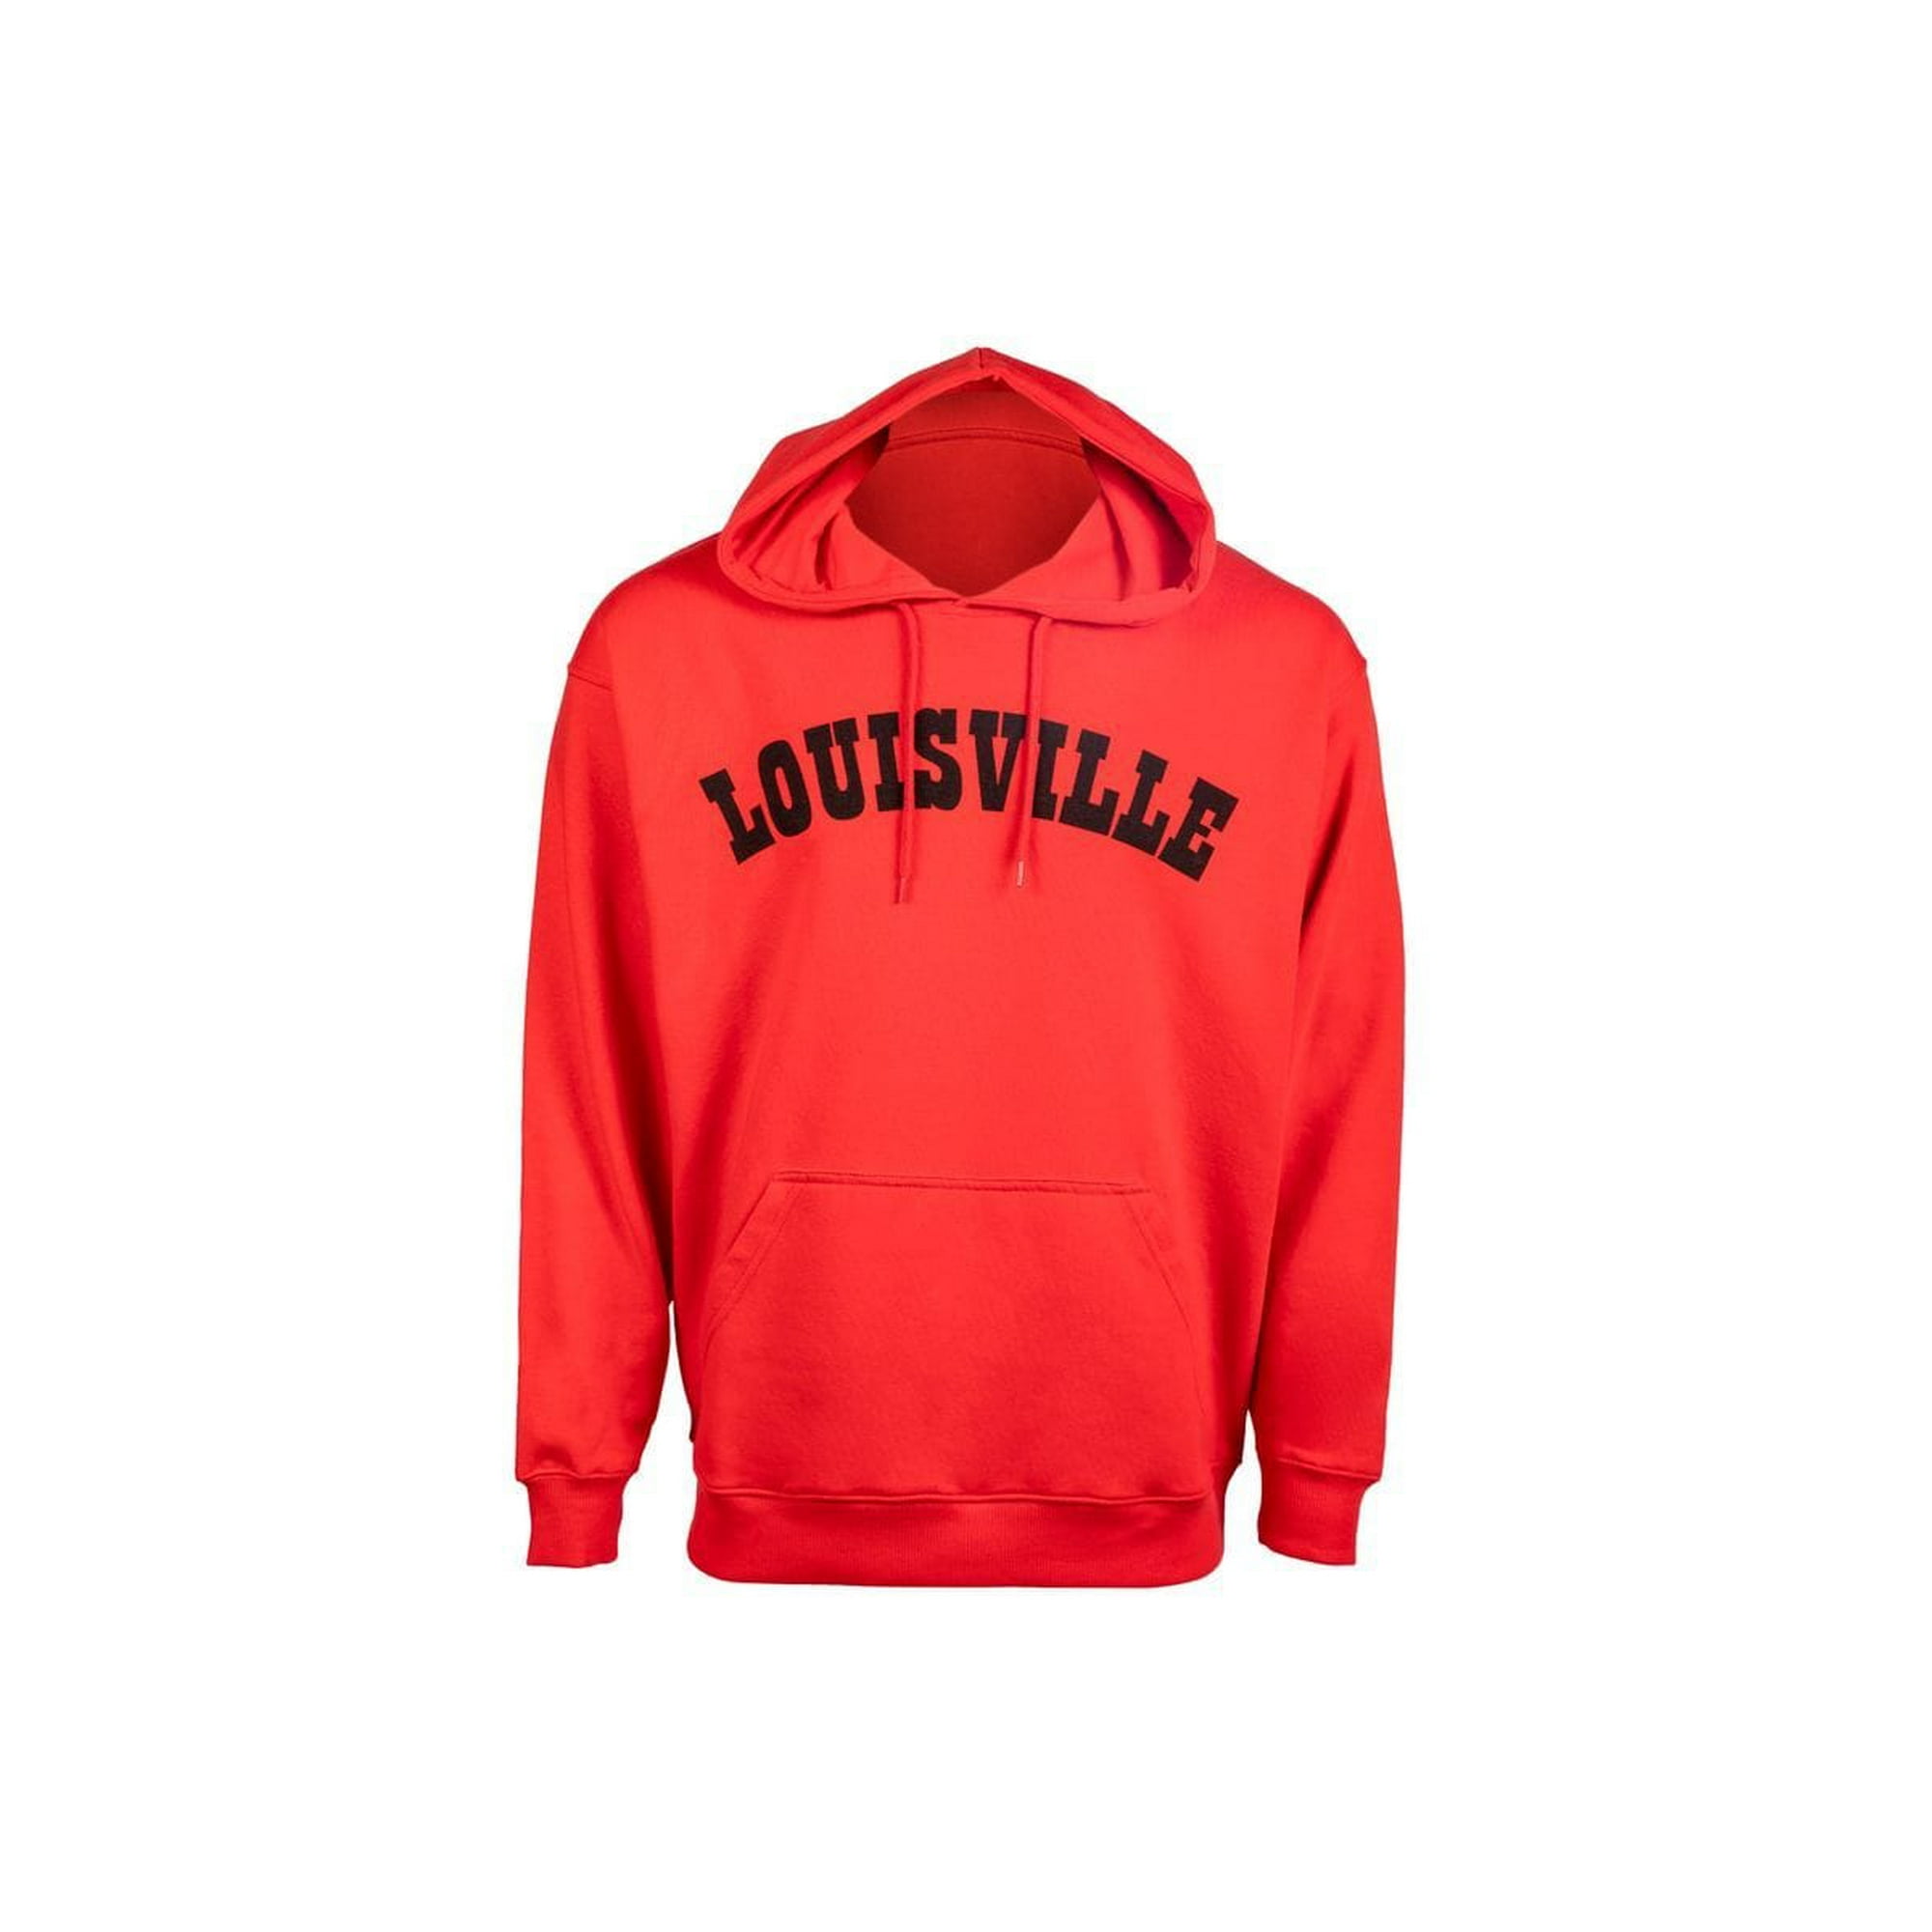 RuckFitt College Hoodies, Sports Team Sweatshirt, Louisville